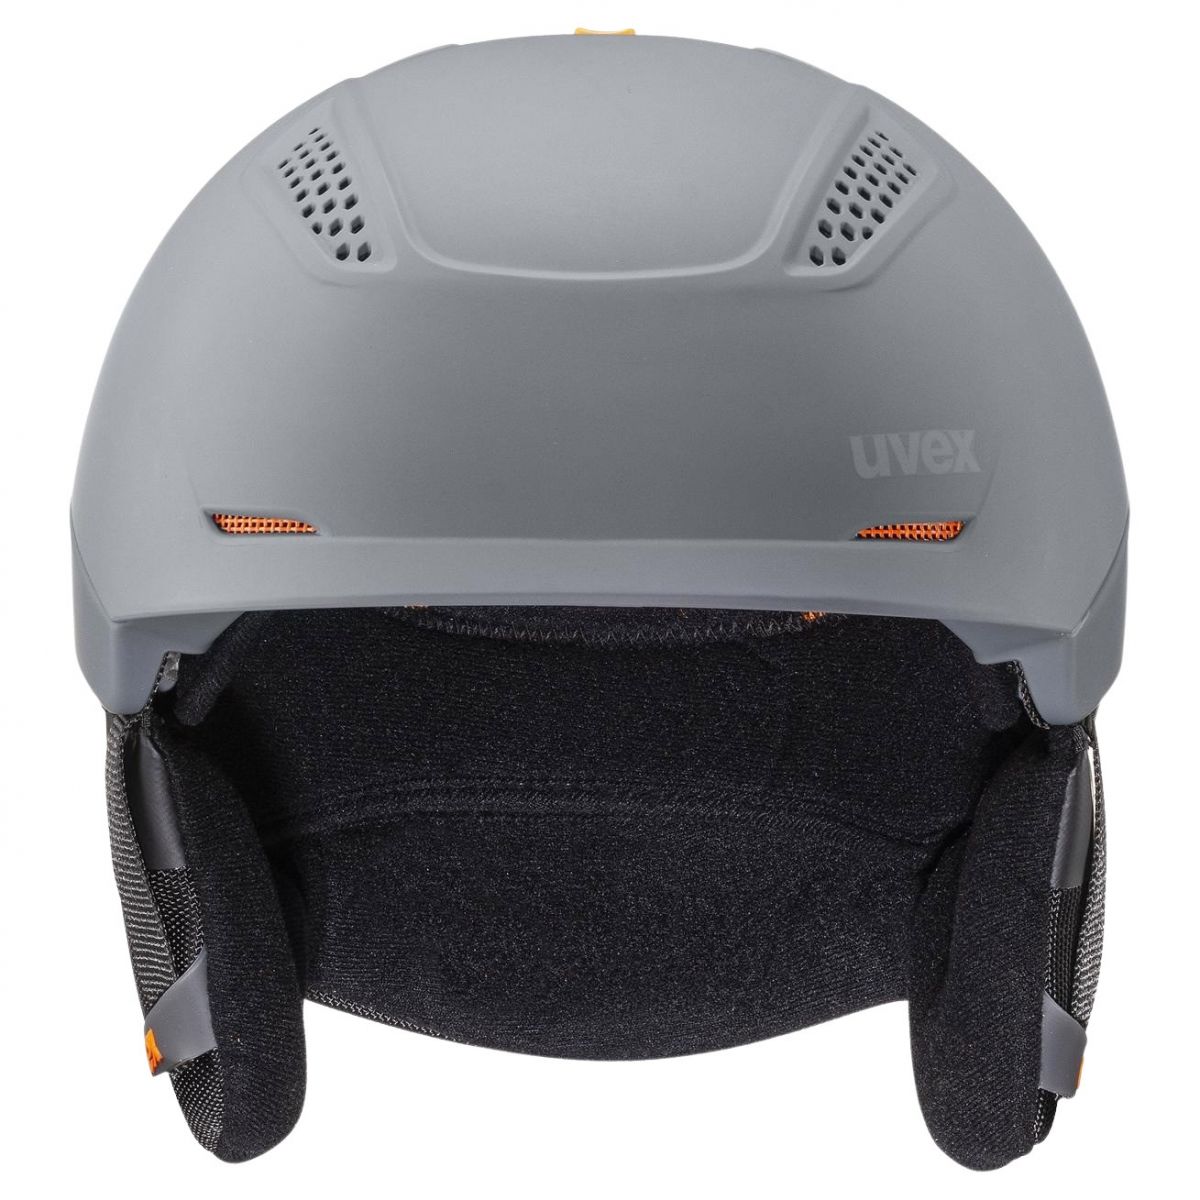 Uvex Ultra, ski helmet, dark slate/orange mat